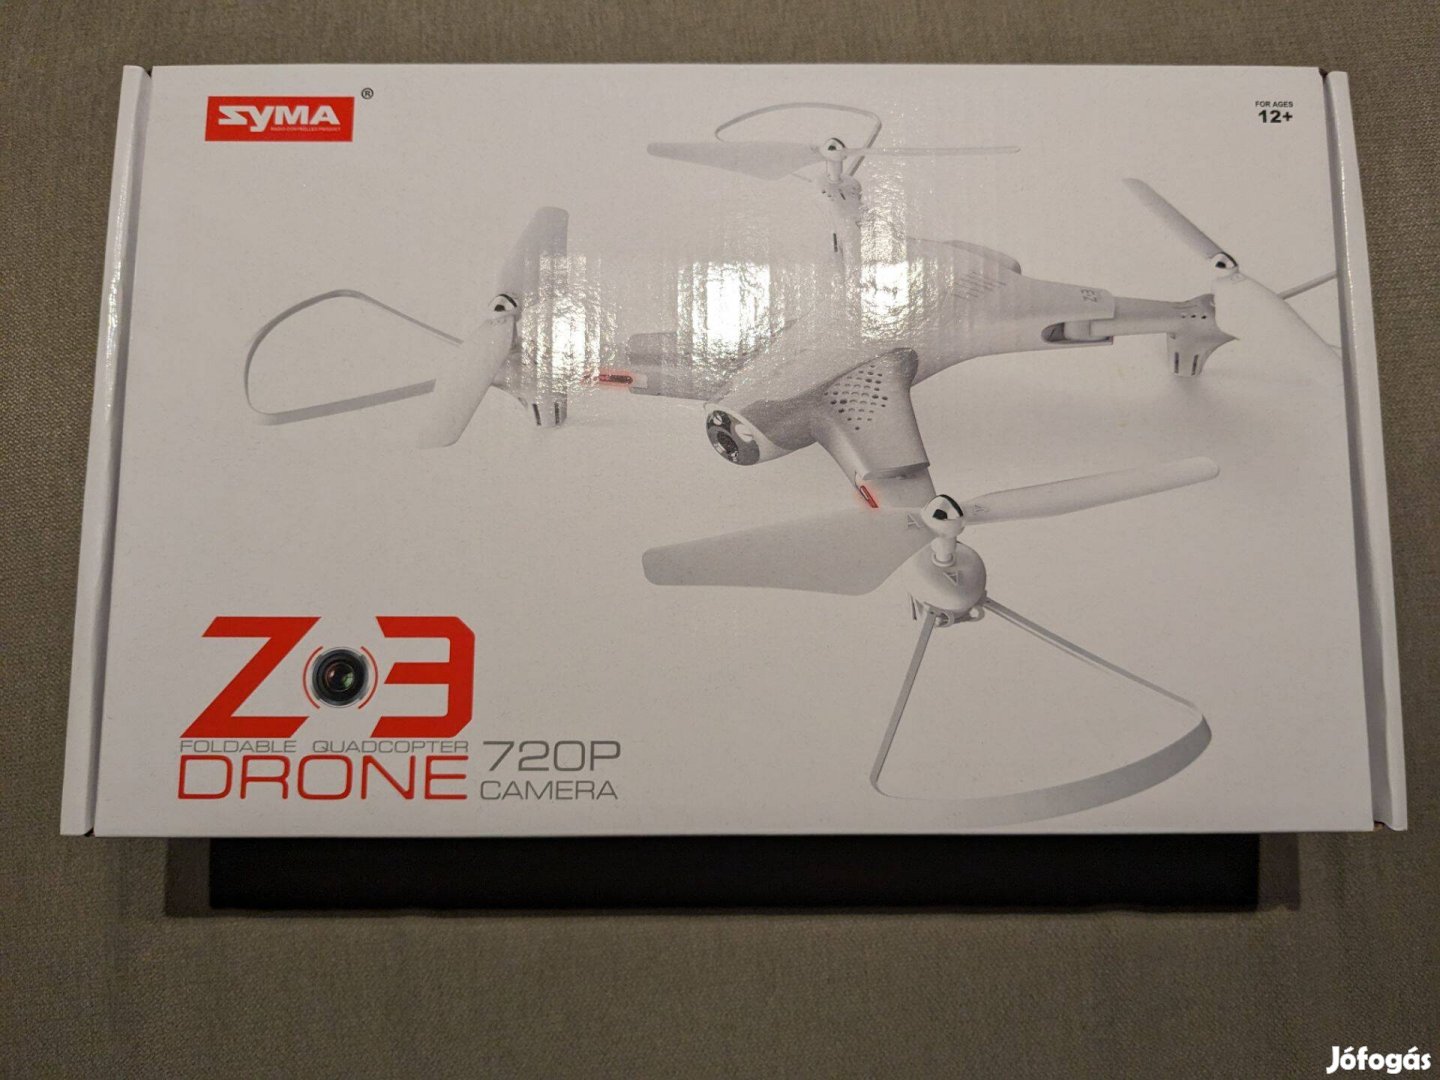 Syma Z3 Dron